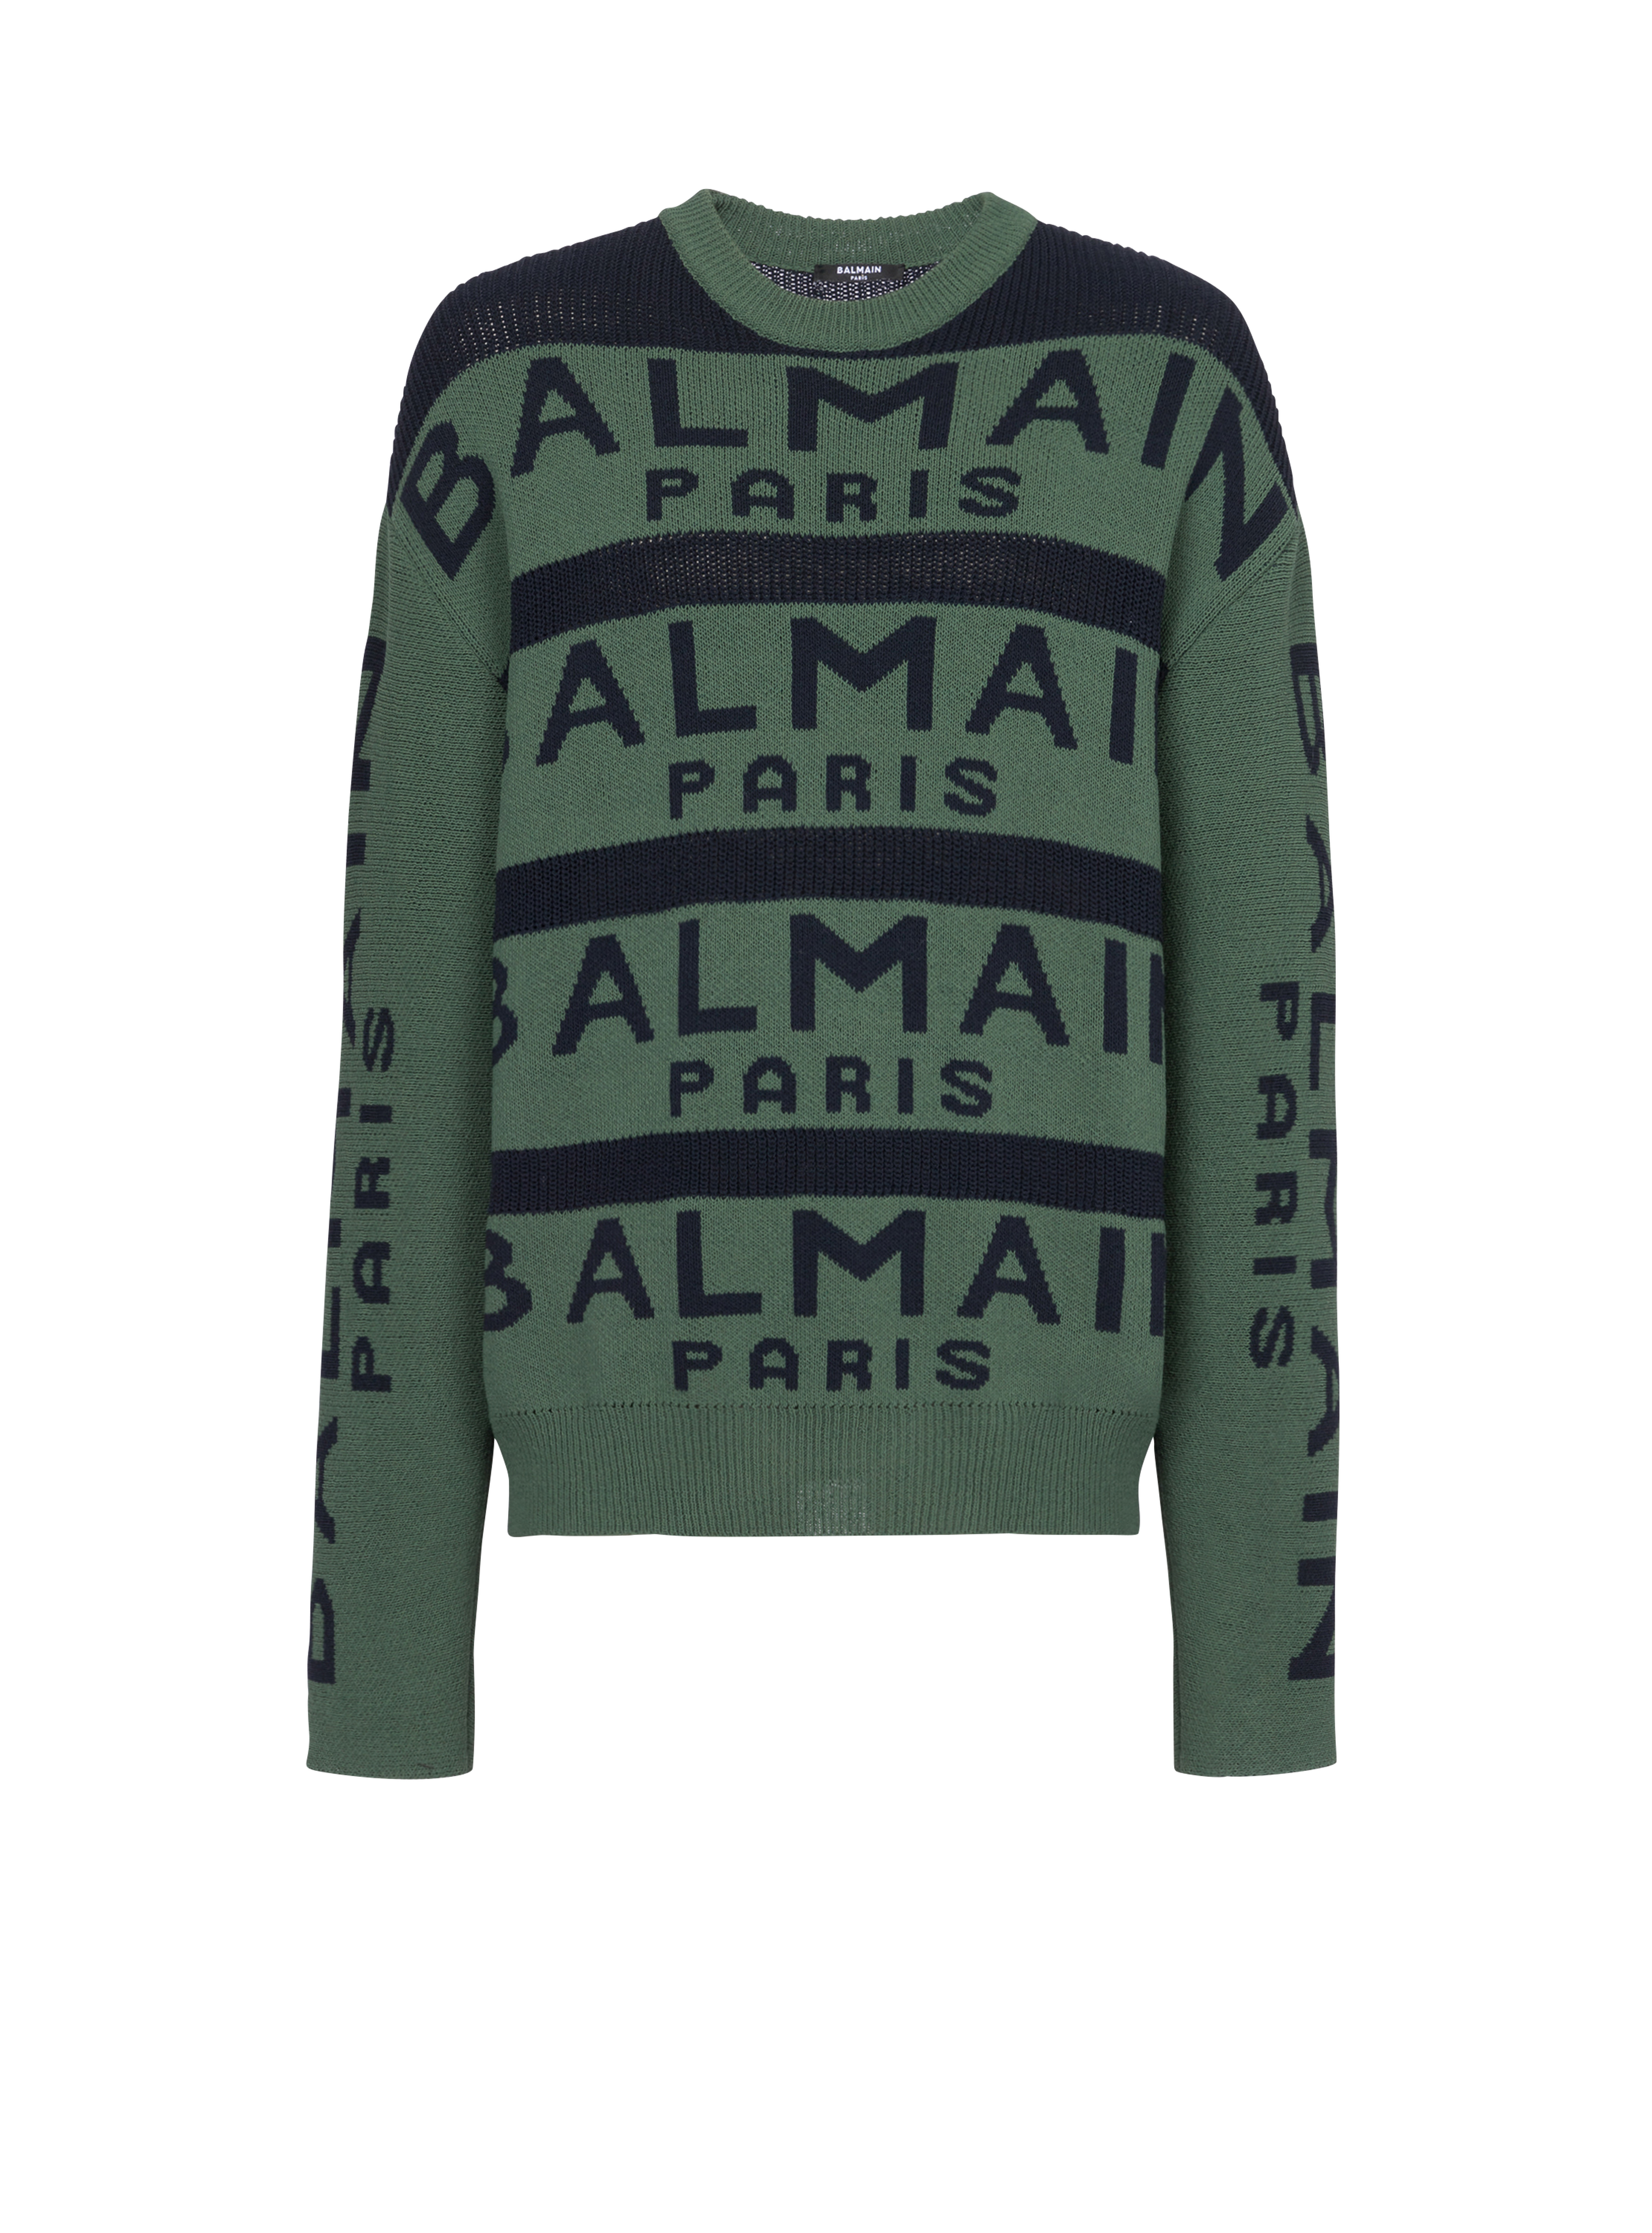 Sweater embroidered with Balmain Paris logo, green